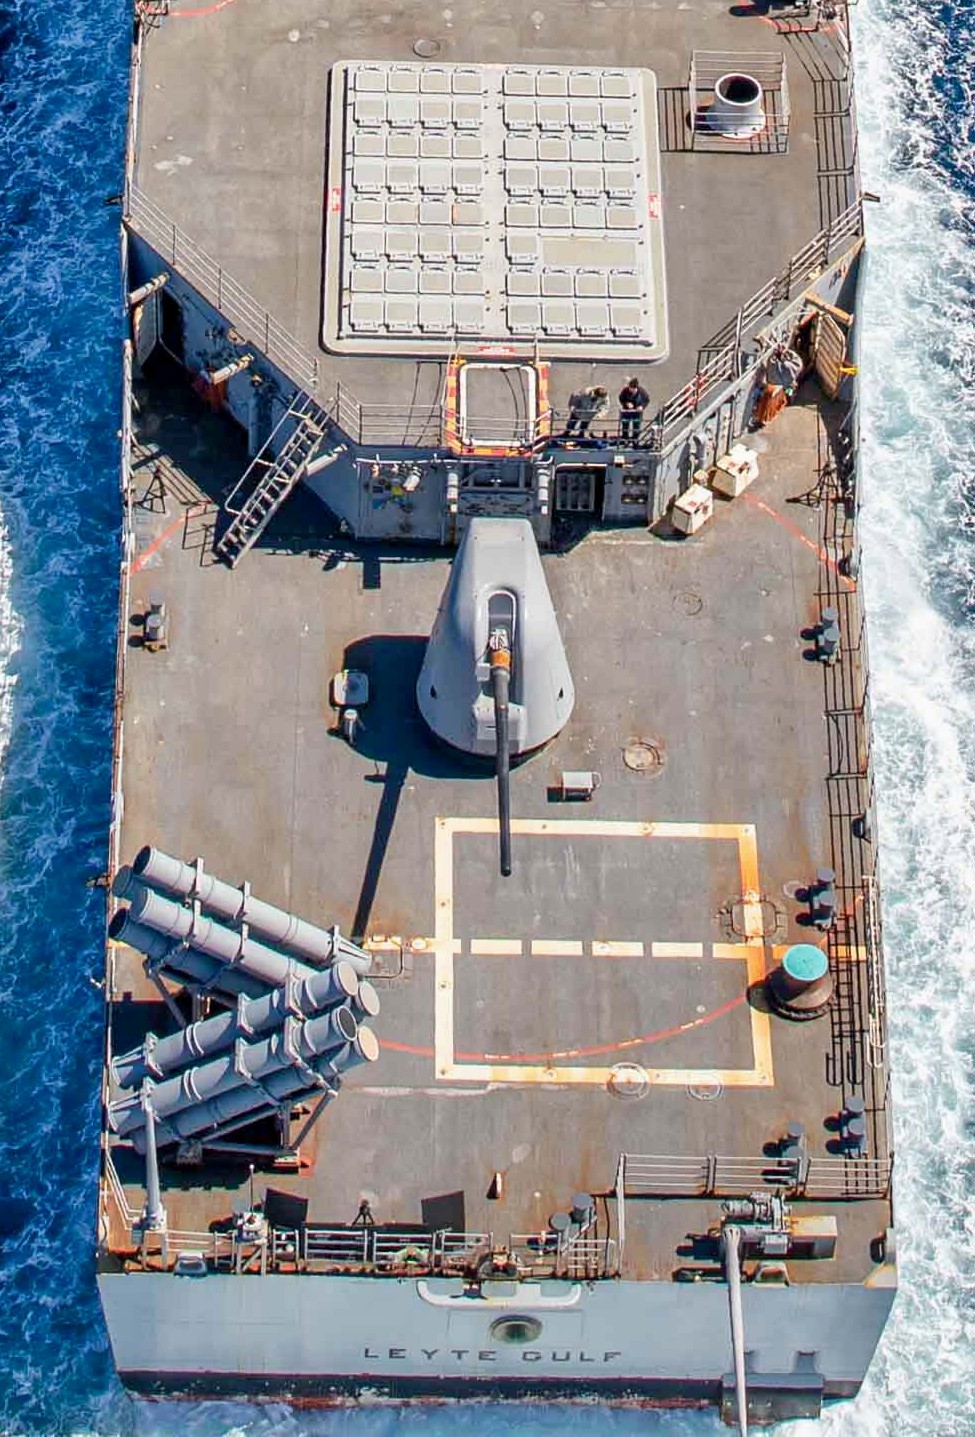 cg-55 uss leyte gulf ticonderoga class guided missile cruiser aegis us navy armament mk.41 vls mk.45 gun 96